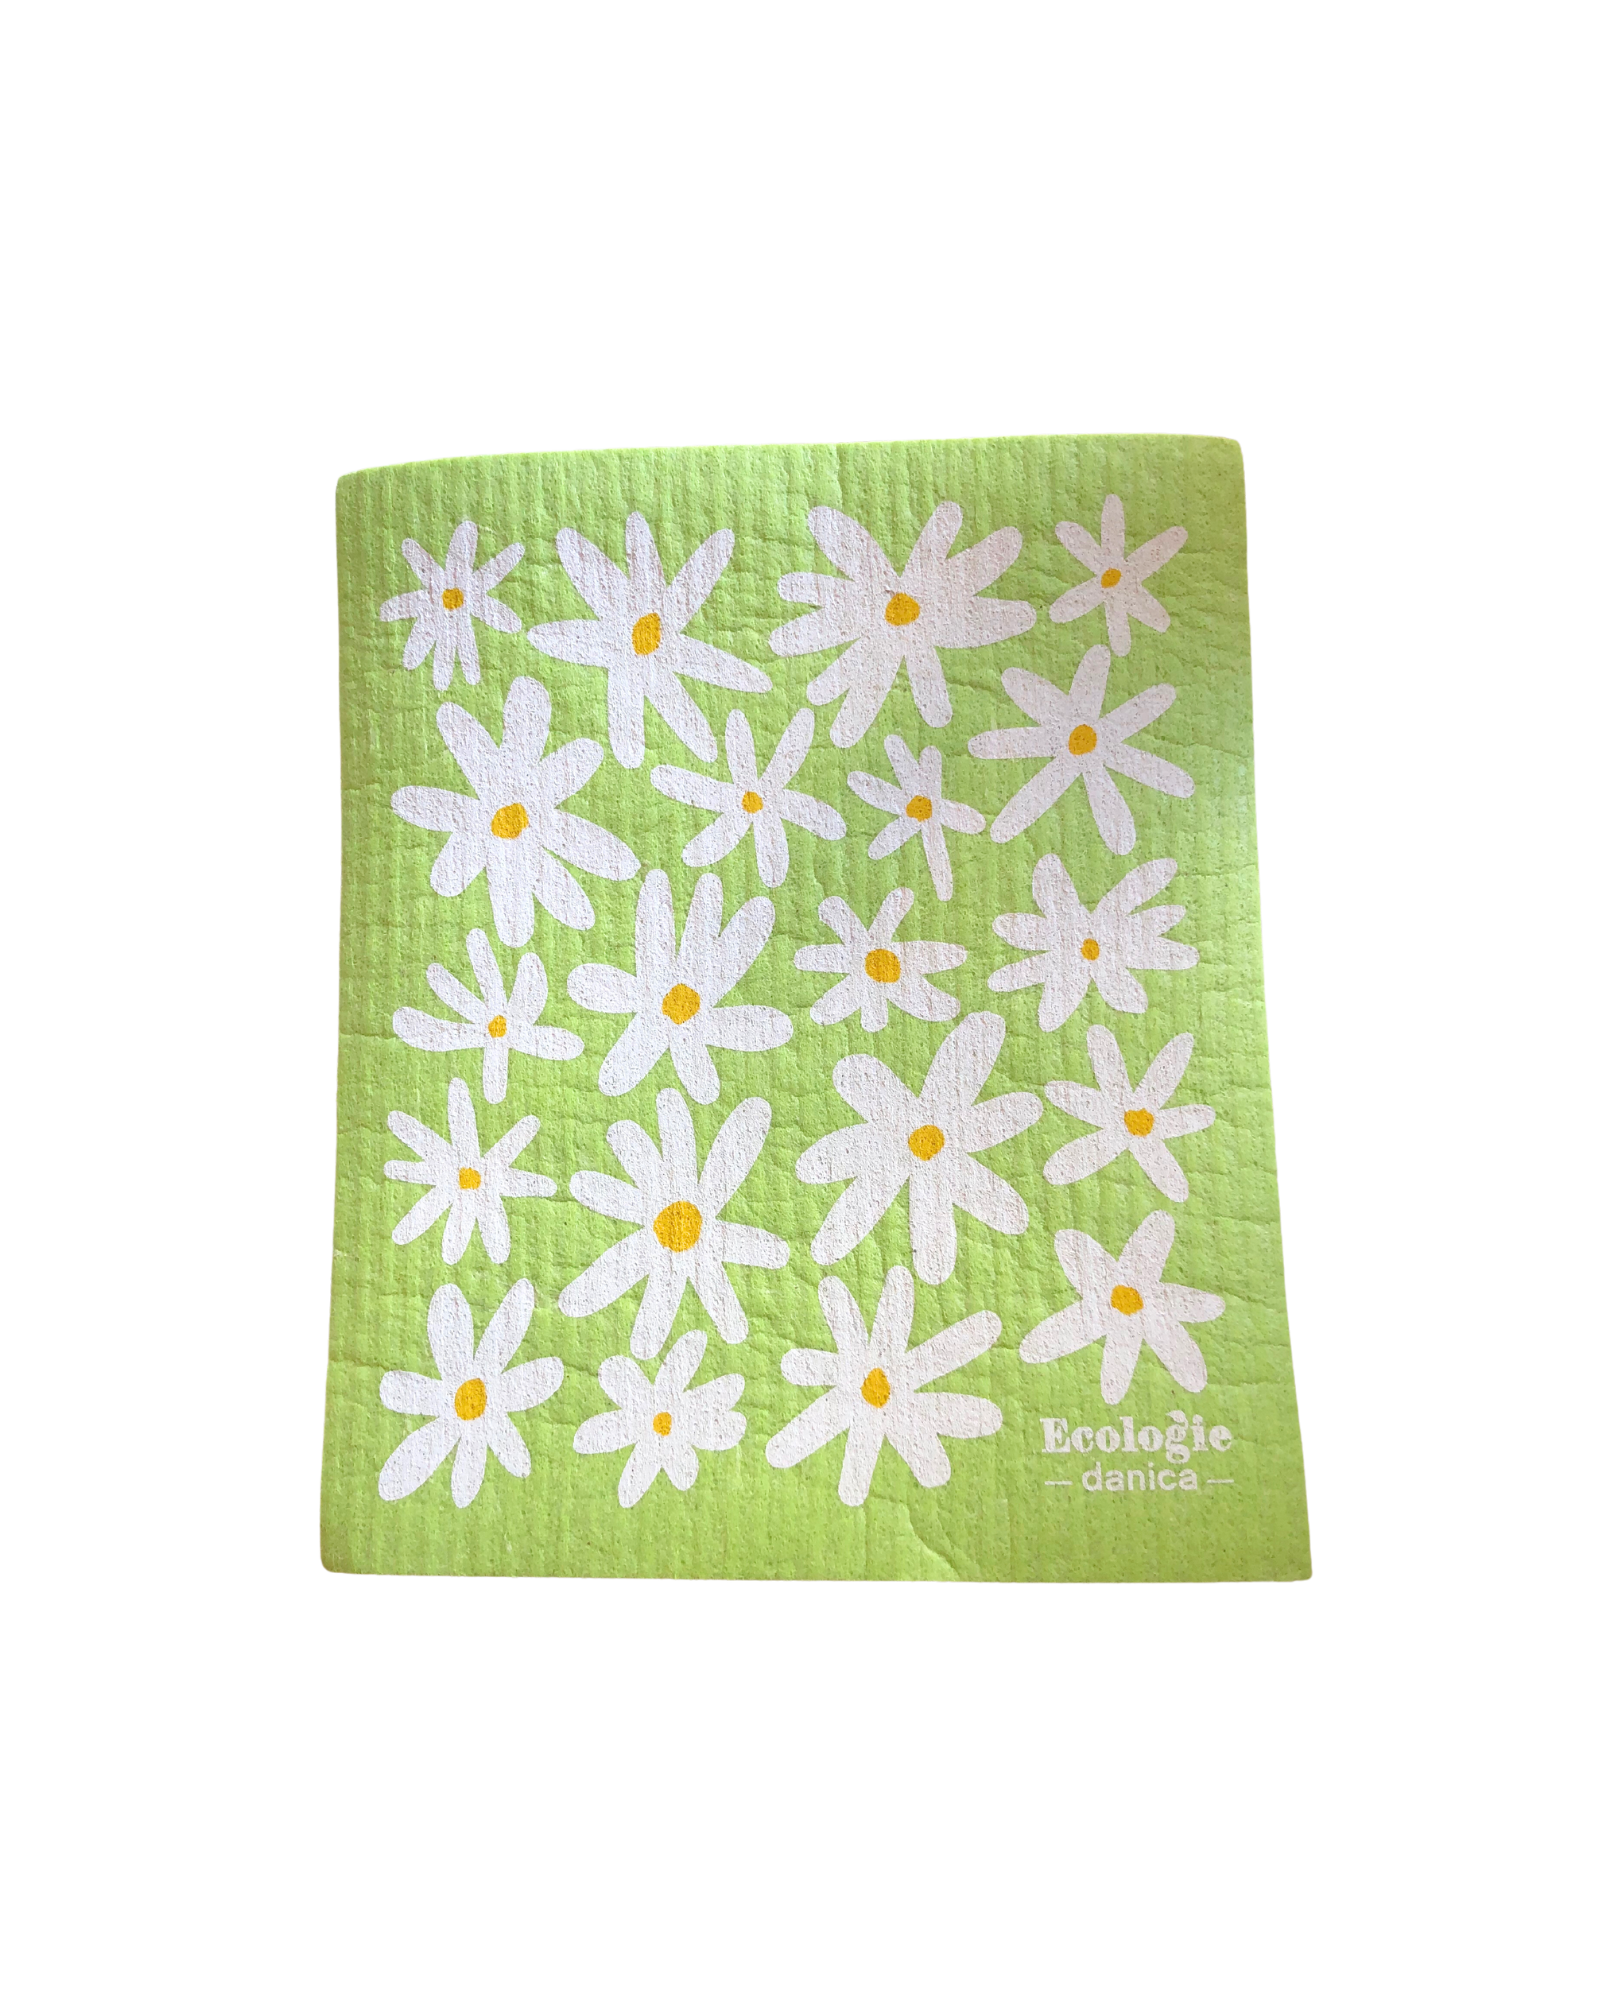 Green swedish dishcloth with white daisies